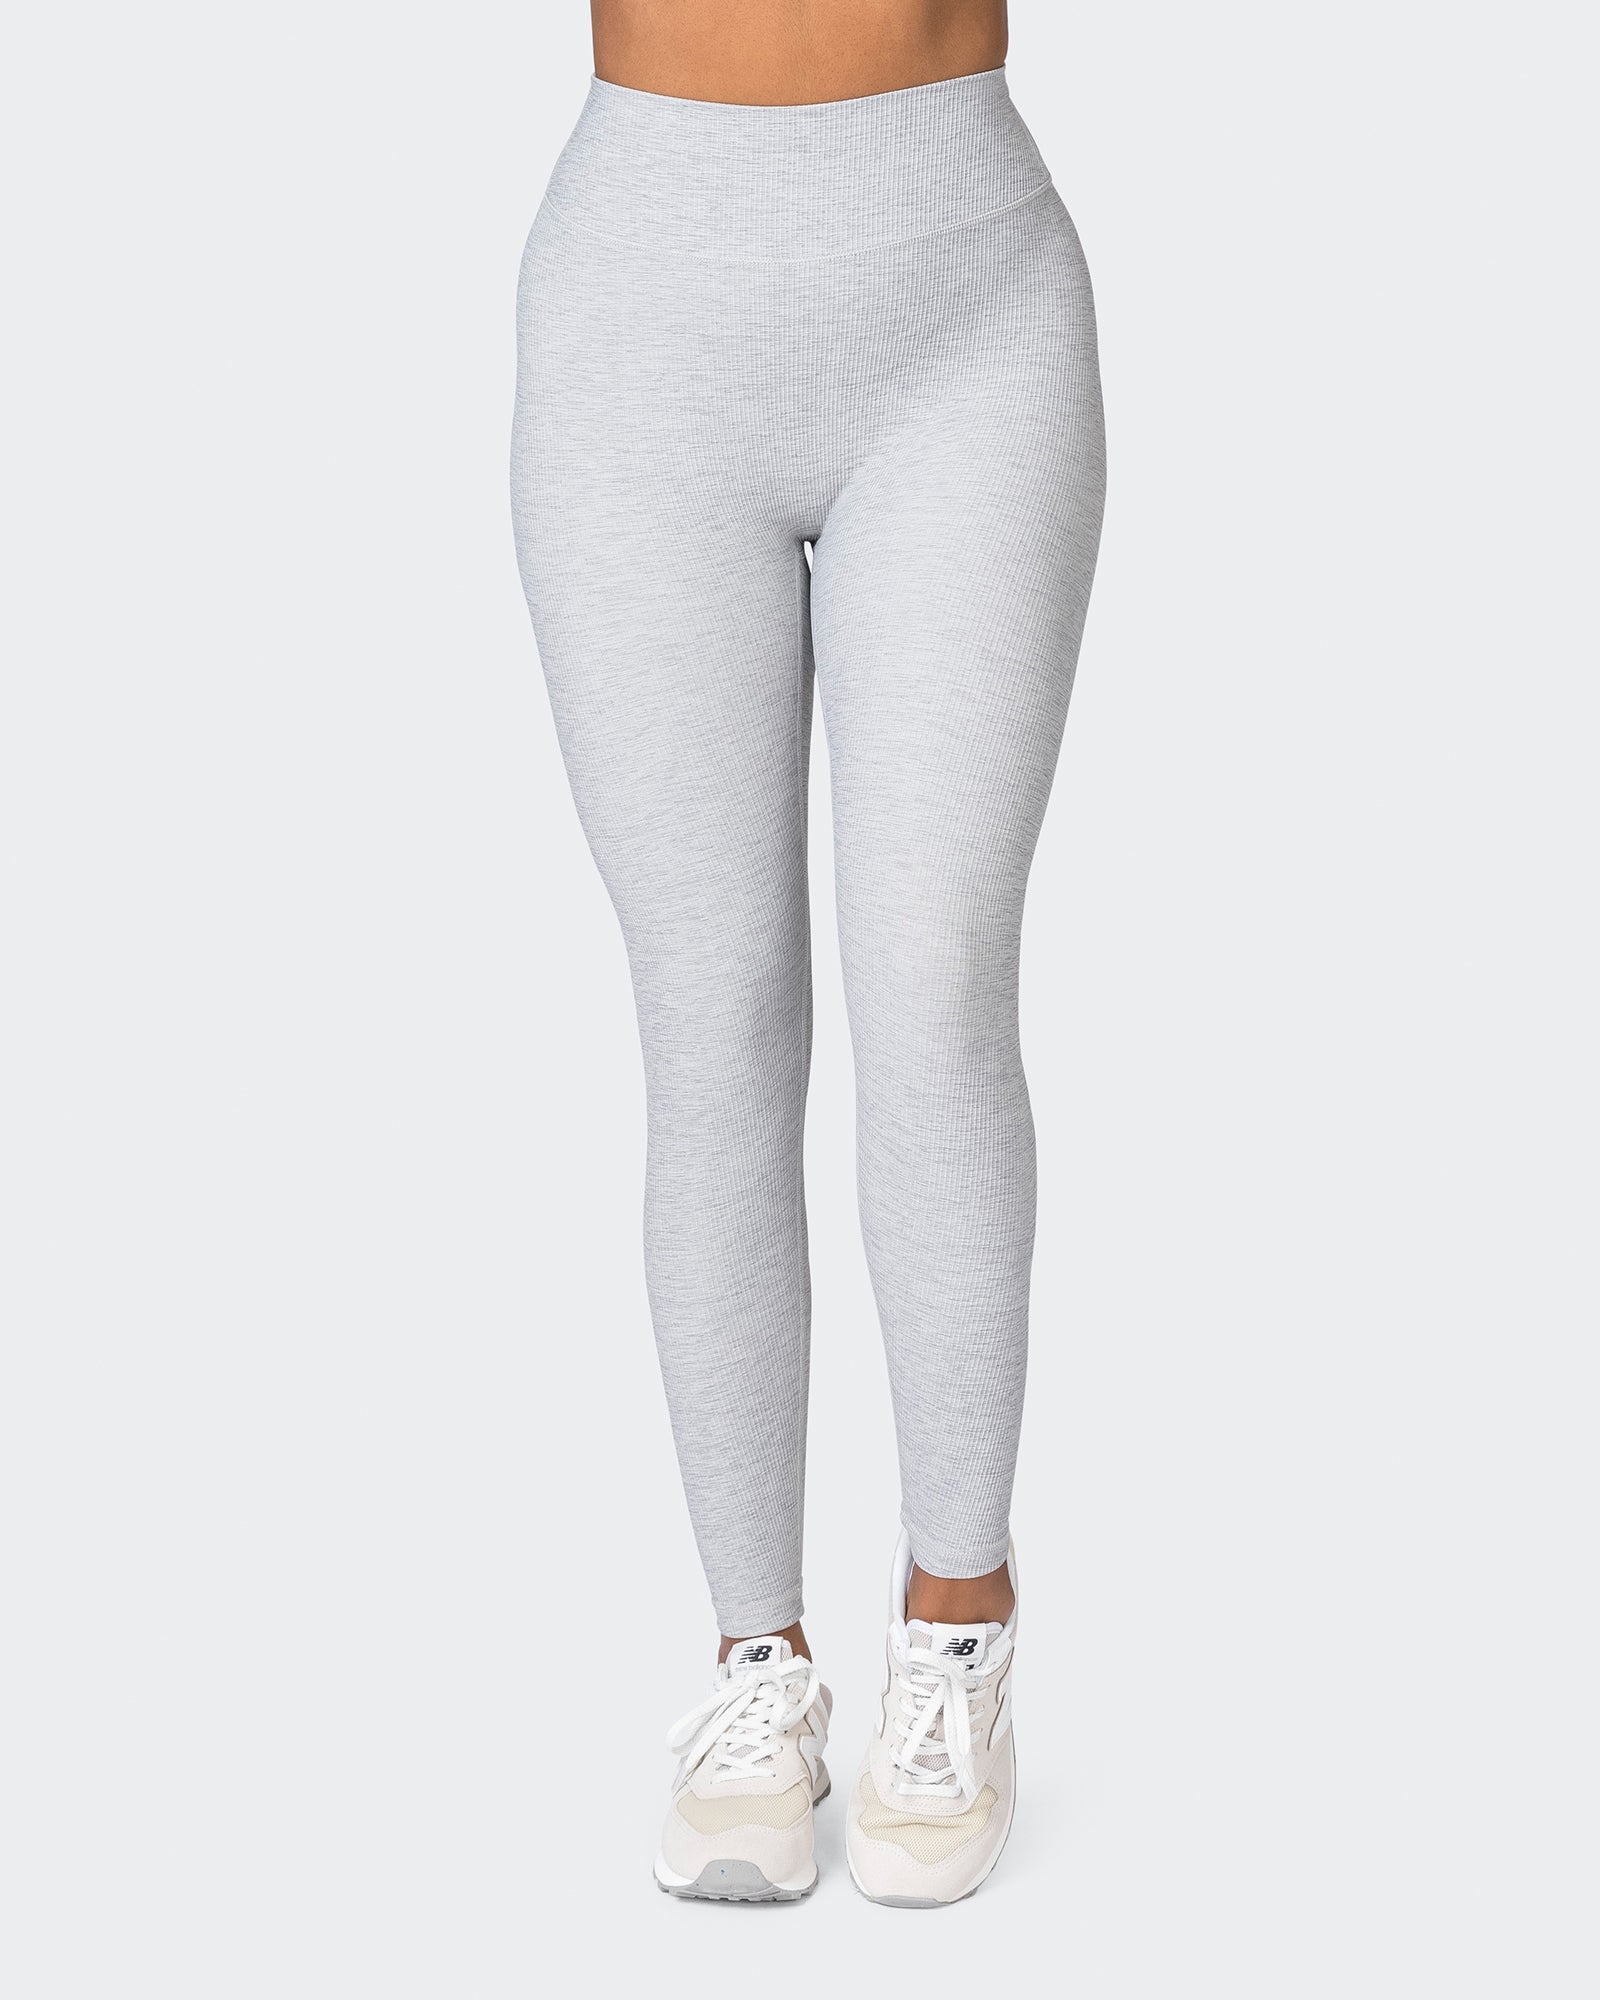 Women's Basic Cotton Leggings - Walmart.com